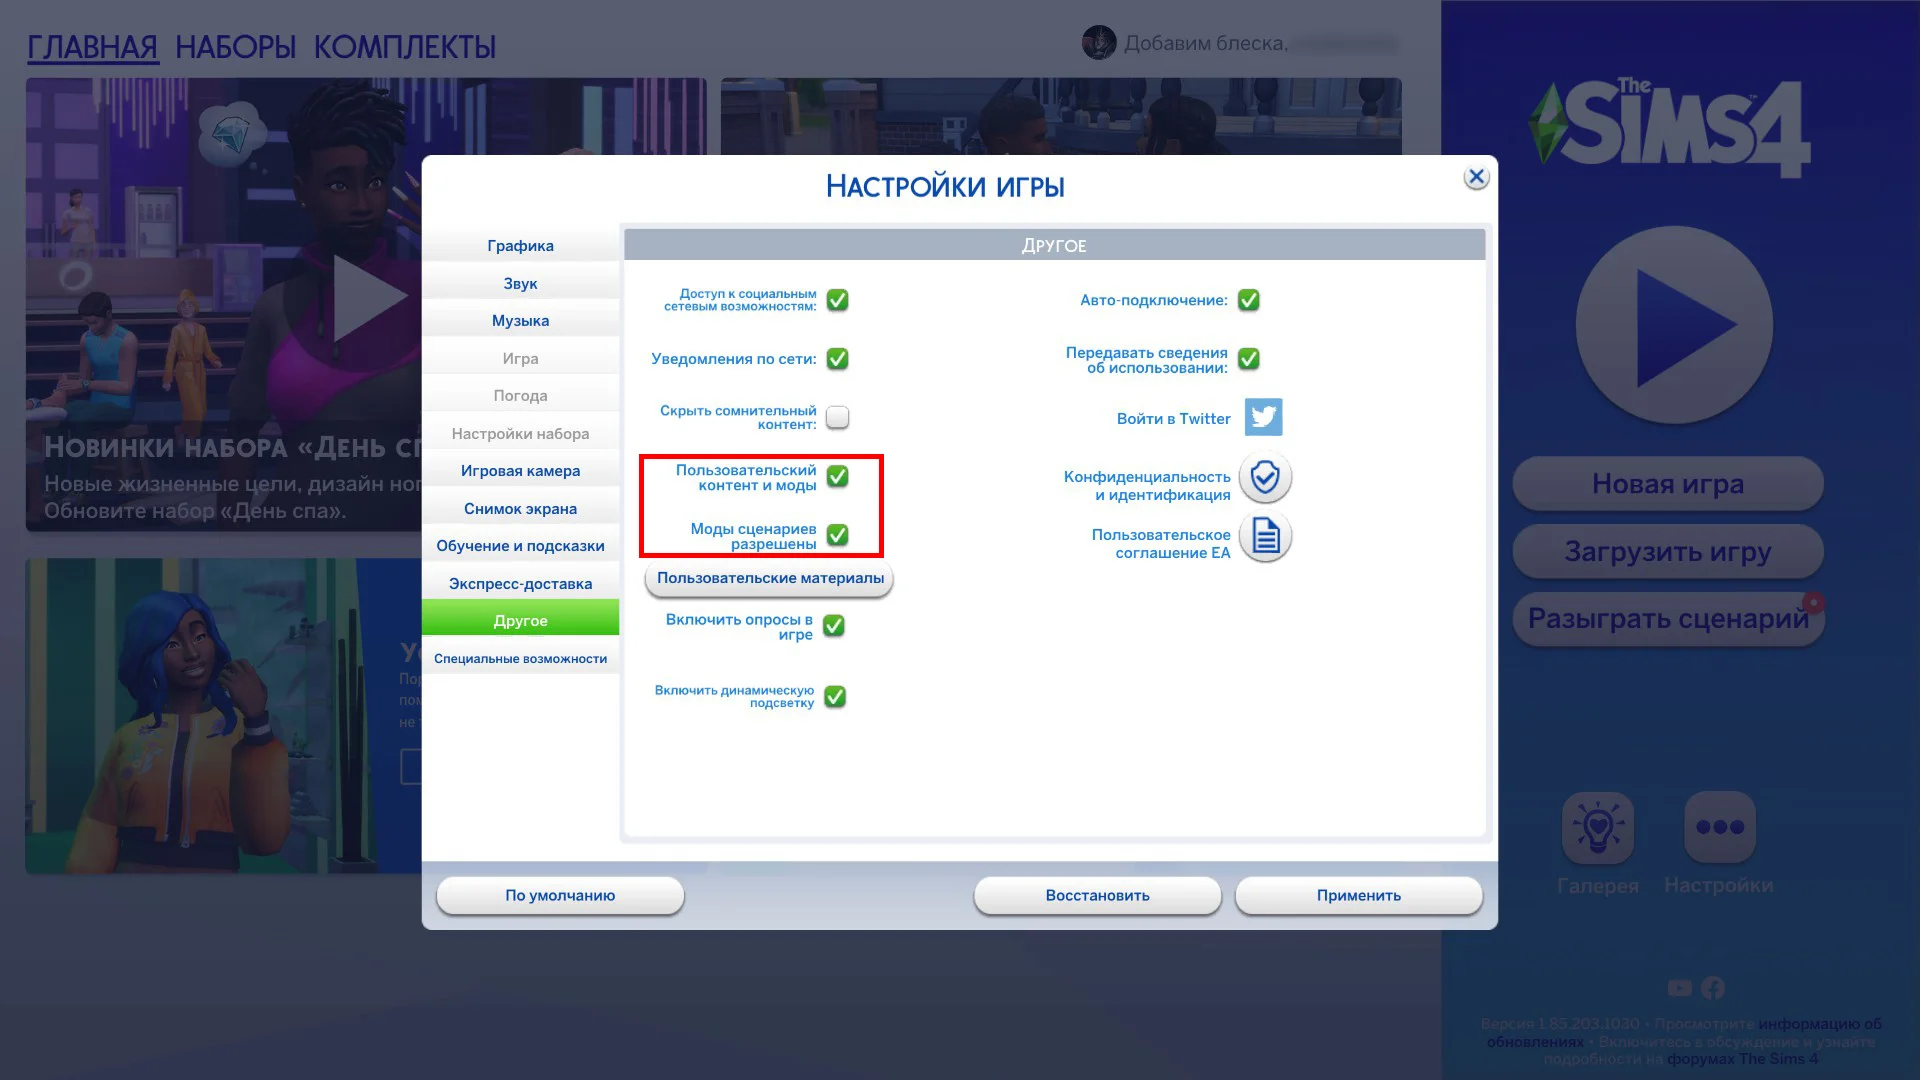 Гайд: Как устанавливать модификации в The Sims 4 - фото 3